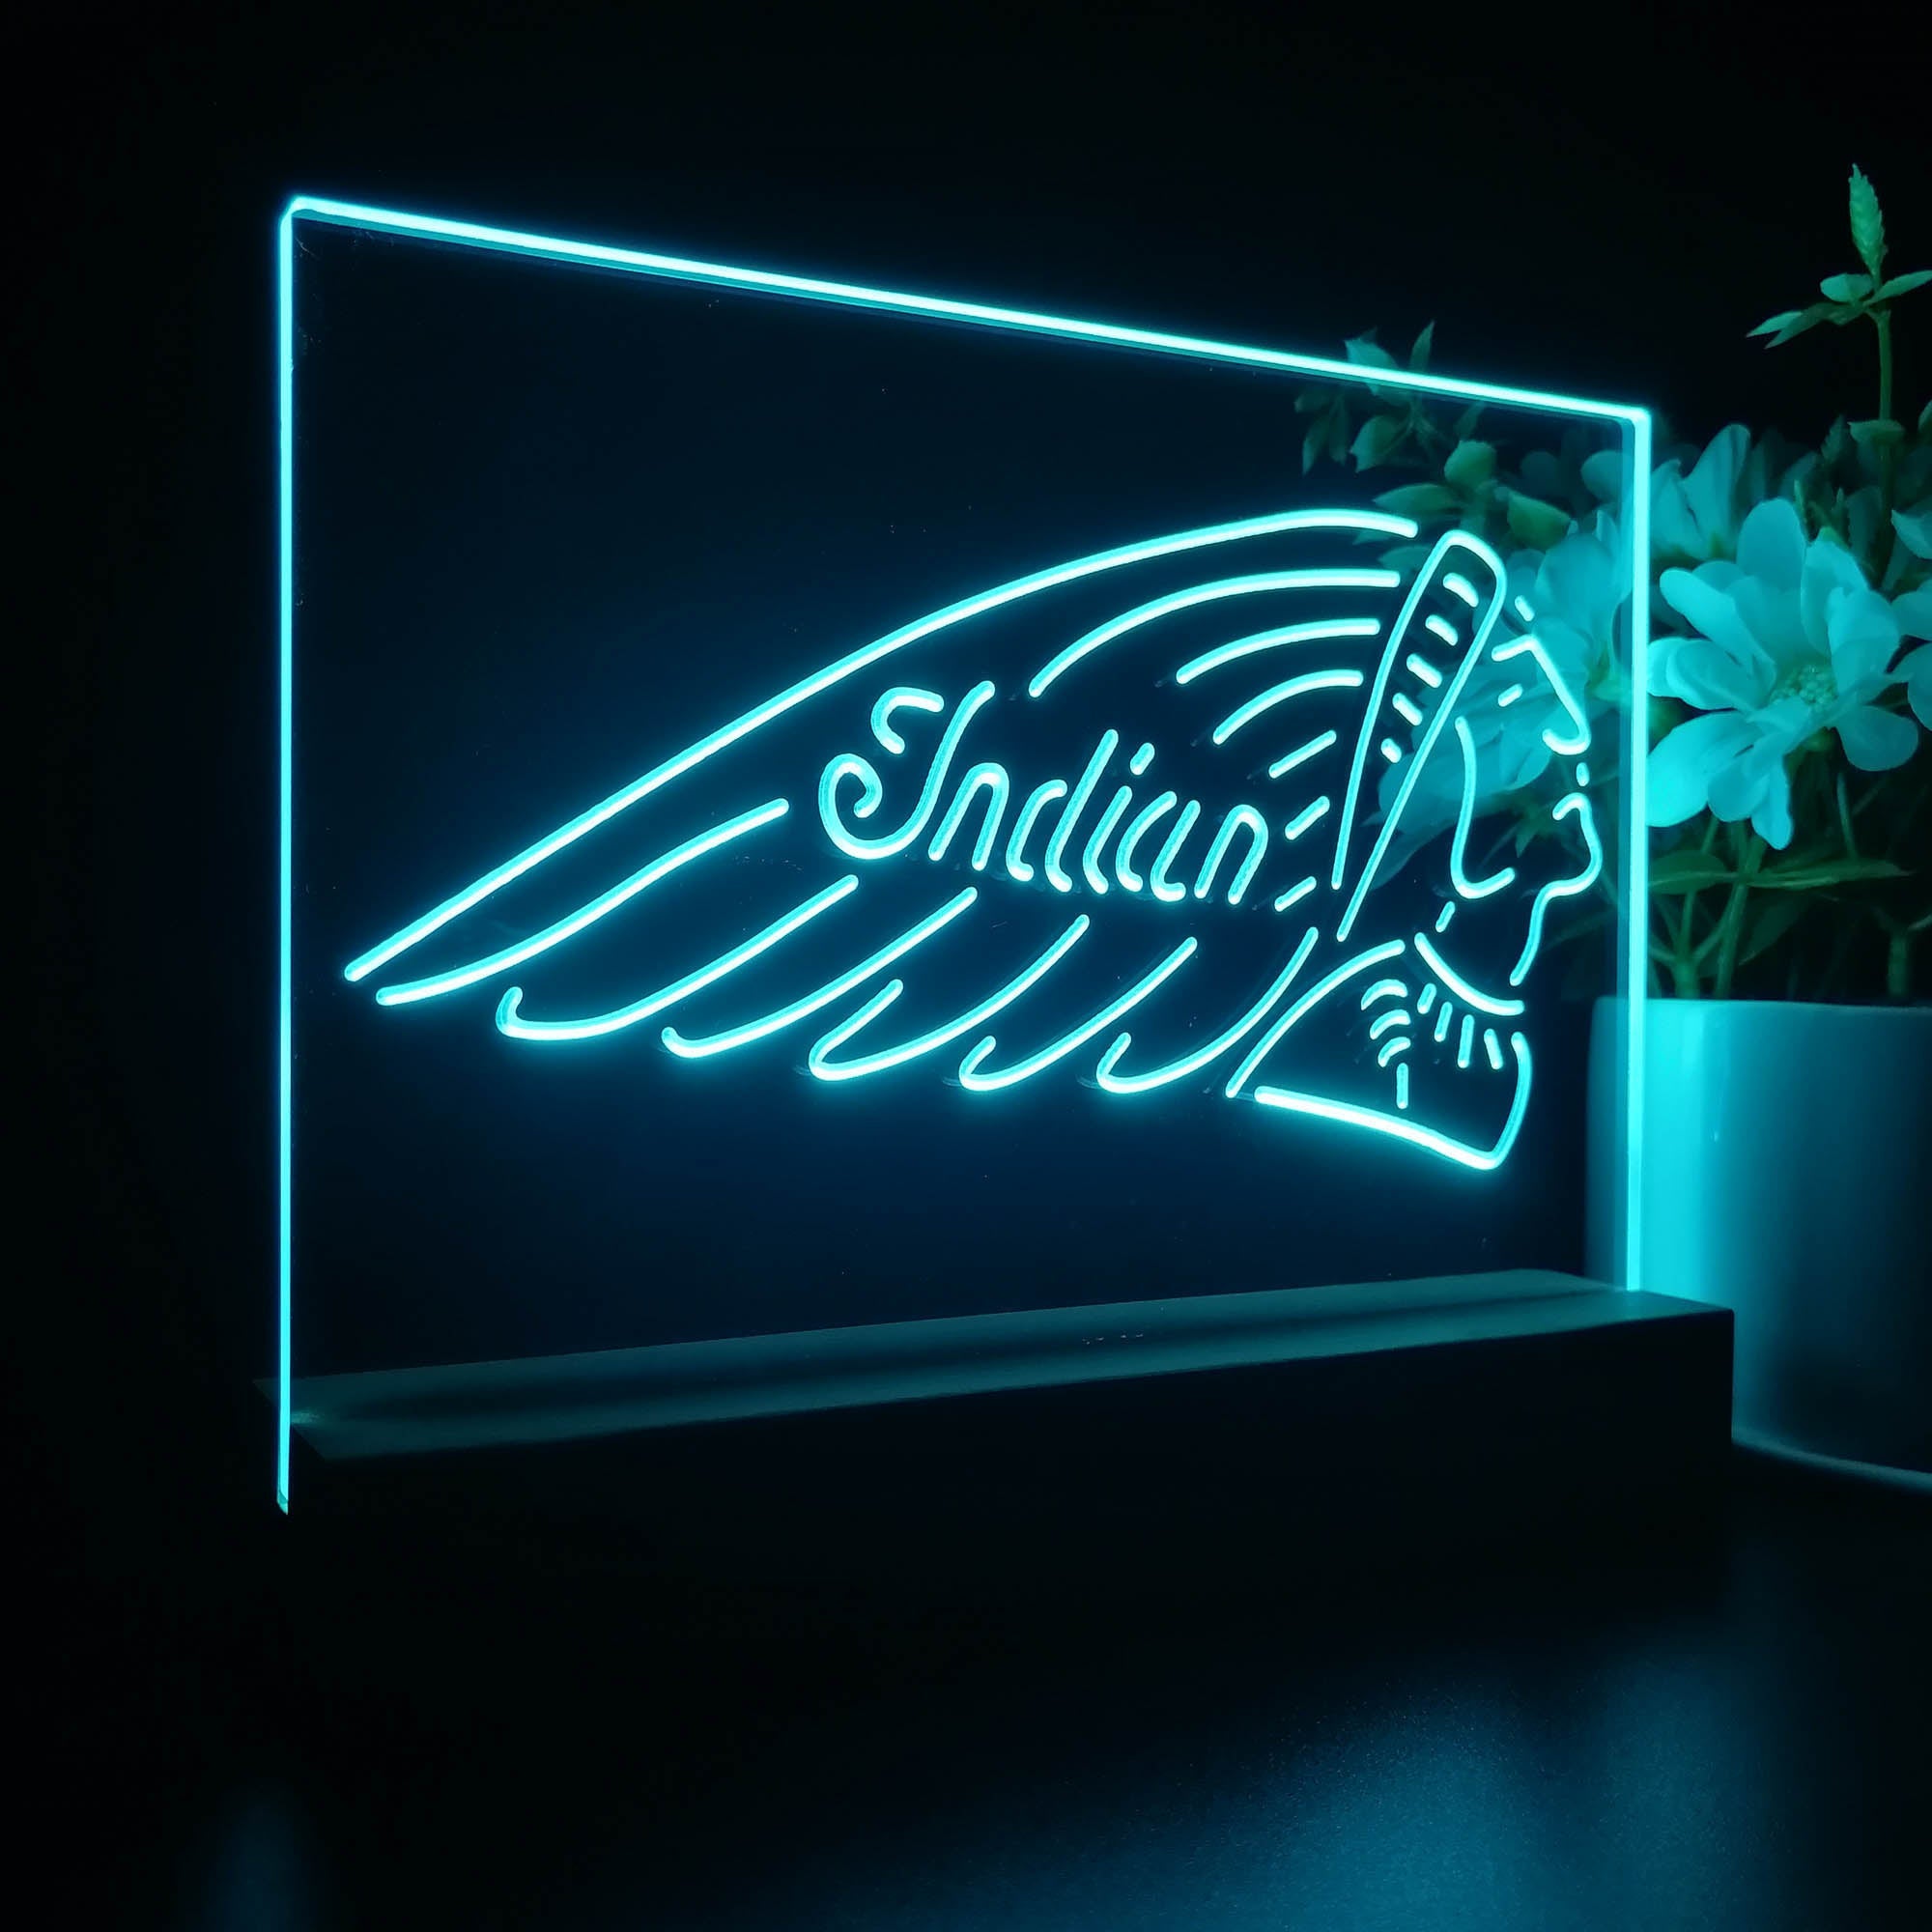 Indian Motorcycle Club 3D Illusion Night Light Desk Lamp